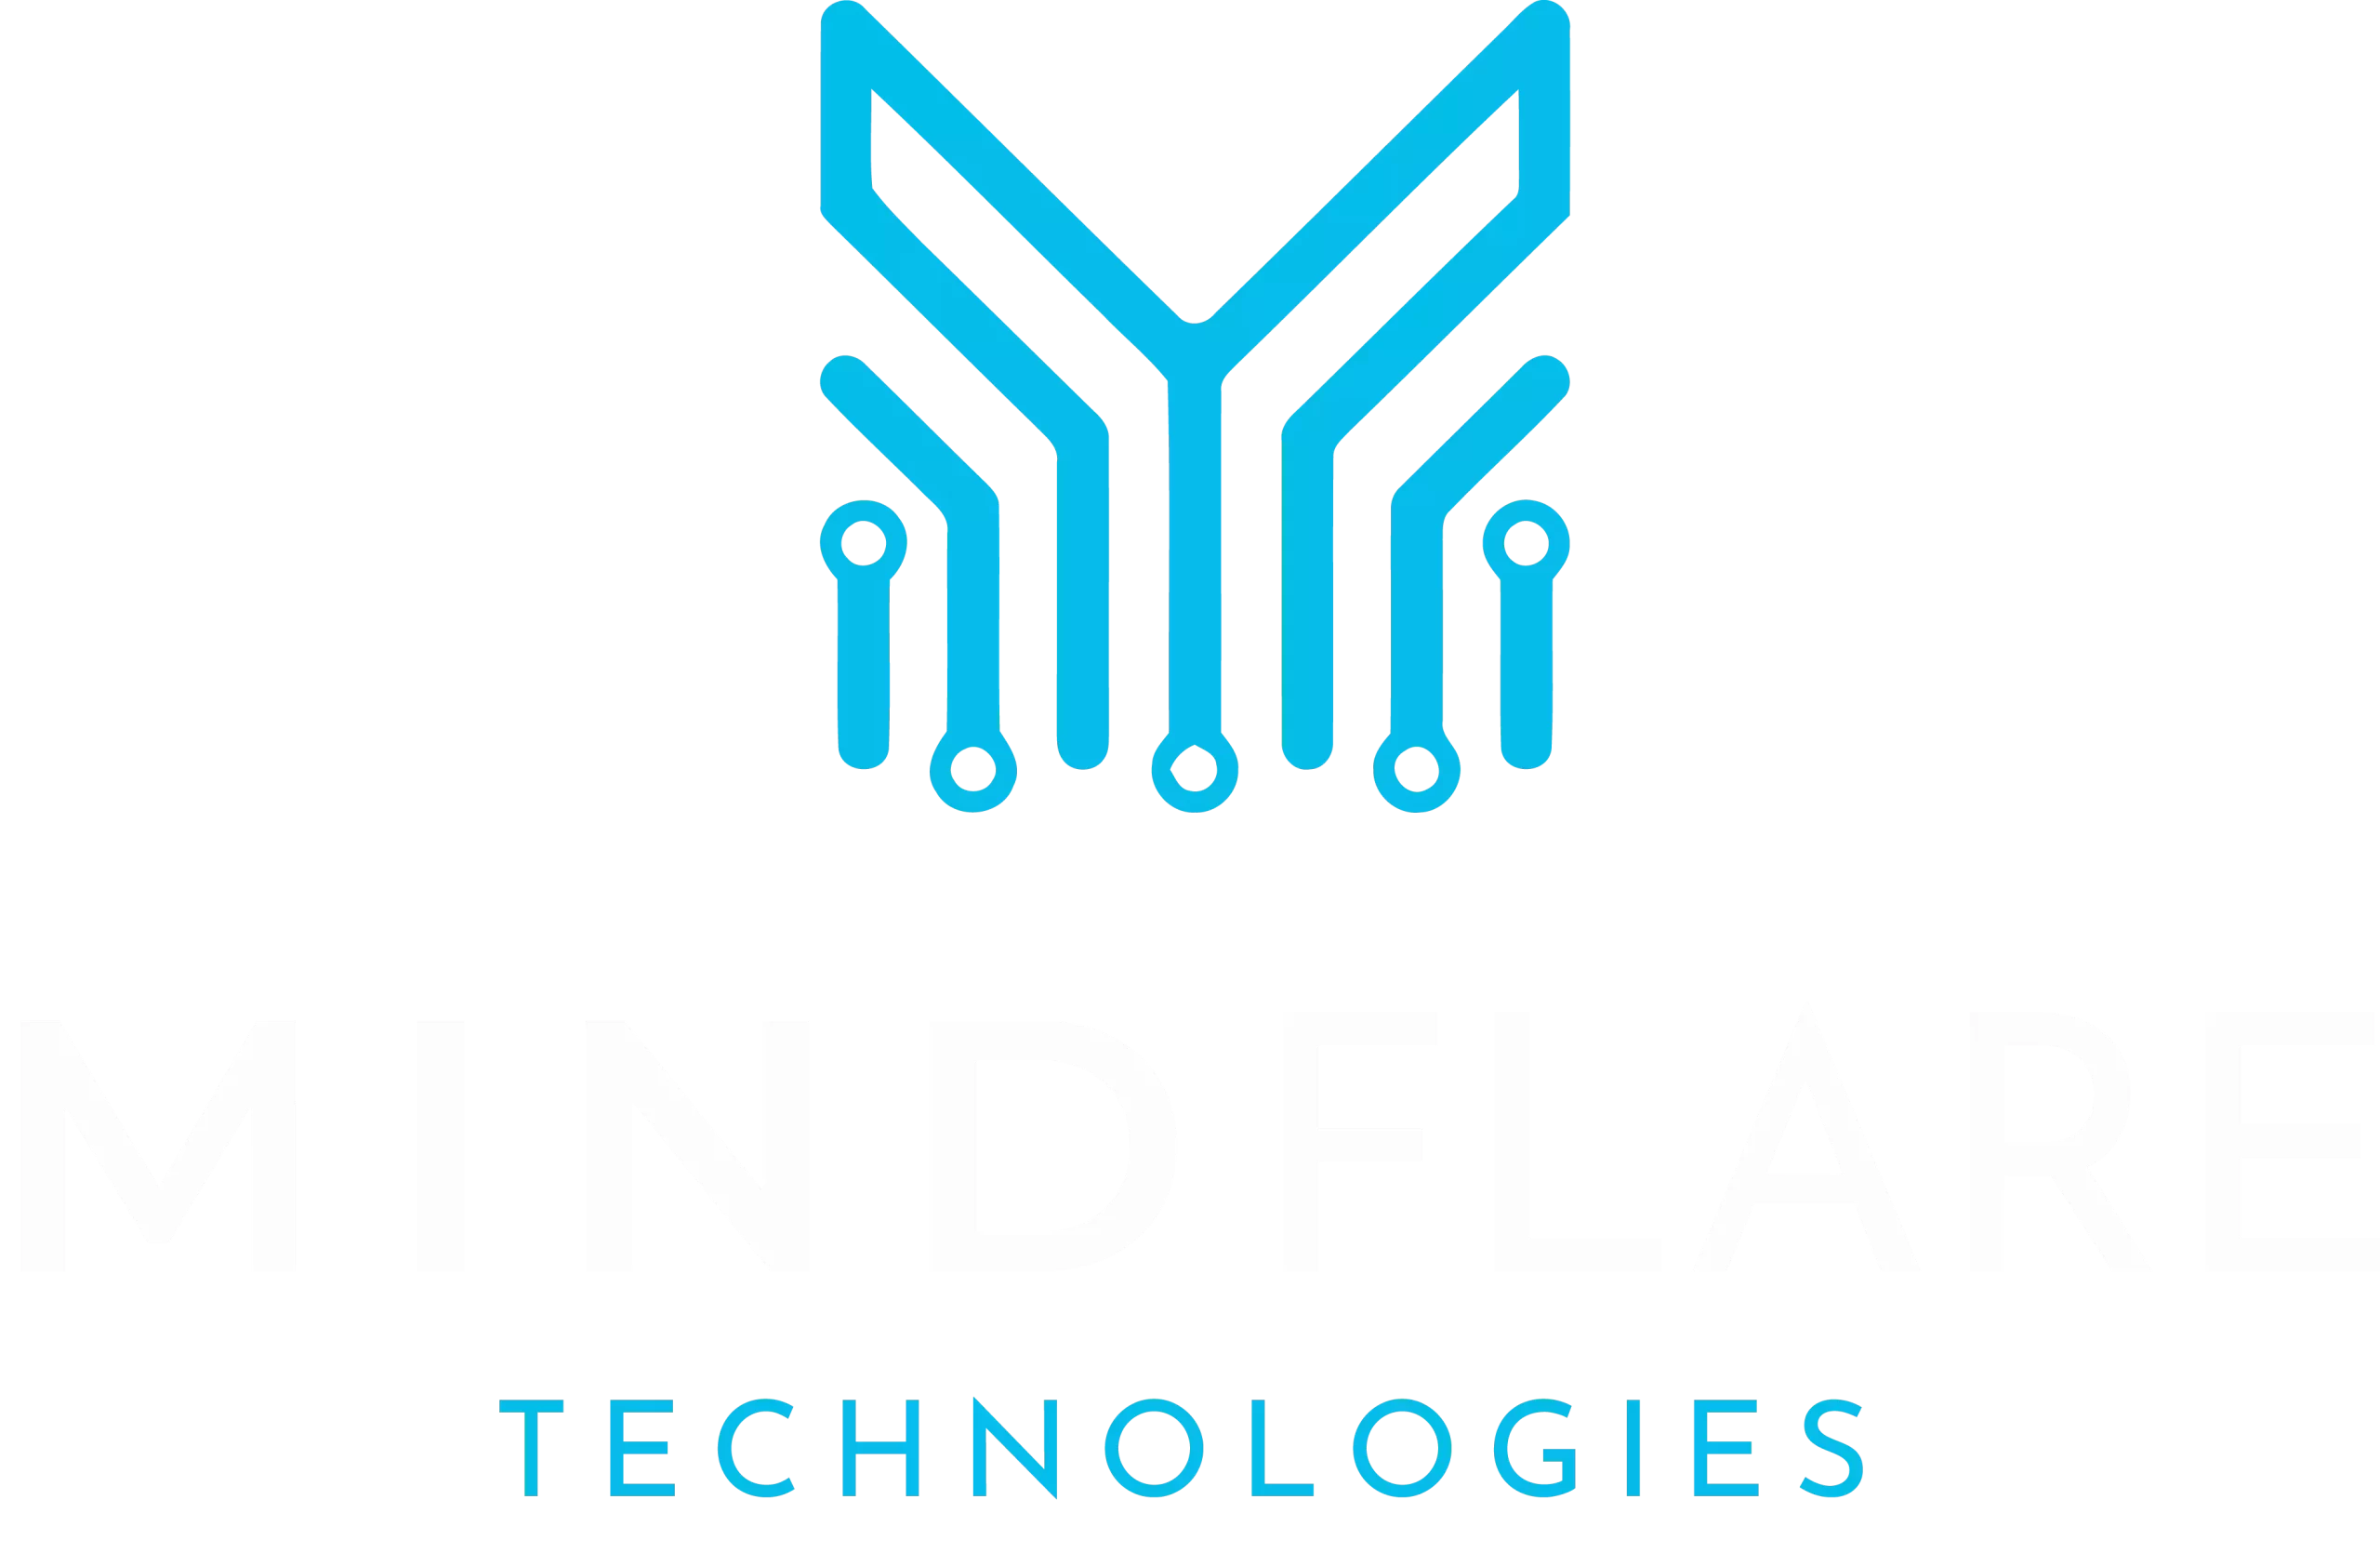 Mindflare Technologies